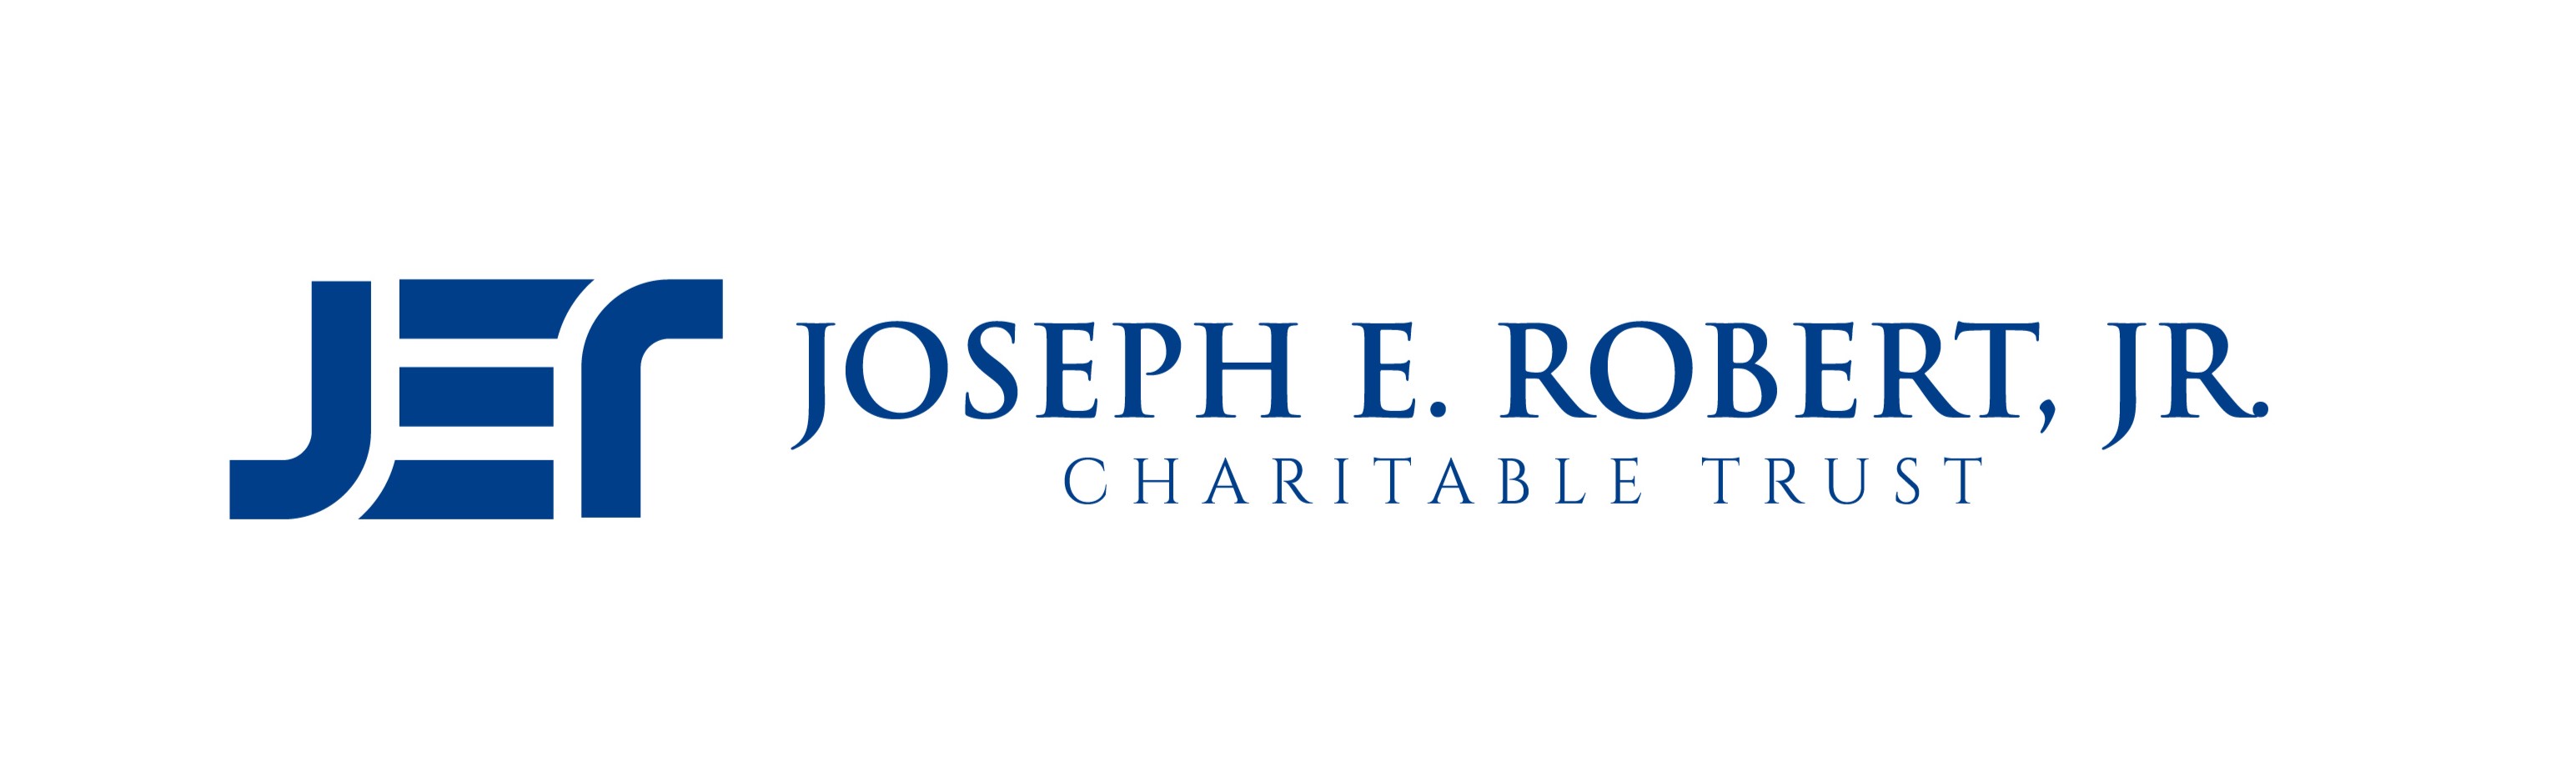 Joseph E. Robert, Jr. Charitable Trust